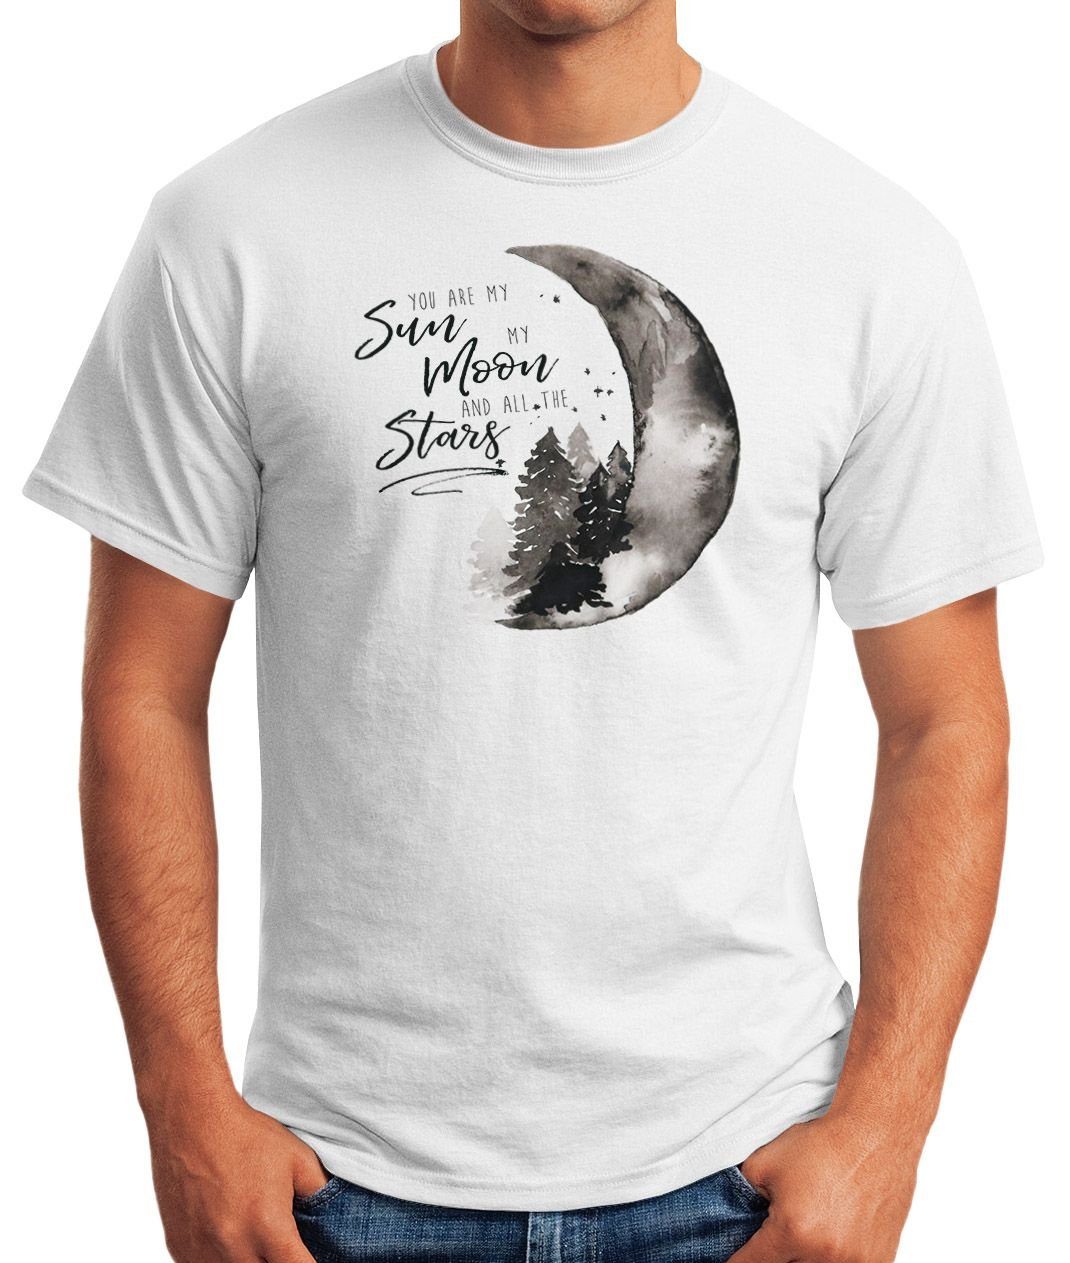 Moonworks® sun, Liebe the Print-Shirt and are mit my moon weiß stars all Love You Herren MoonWorks Geschenk Quote Print Spruch T-Shirt my